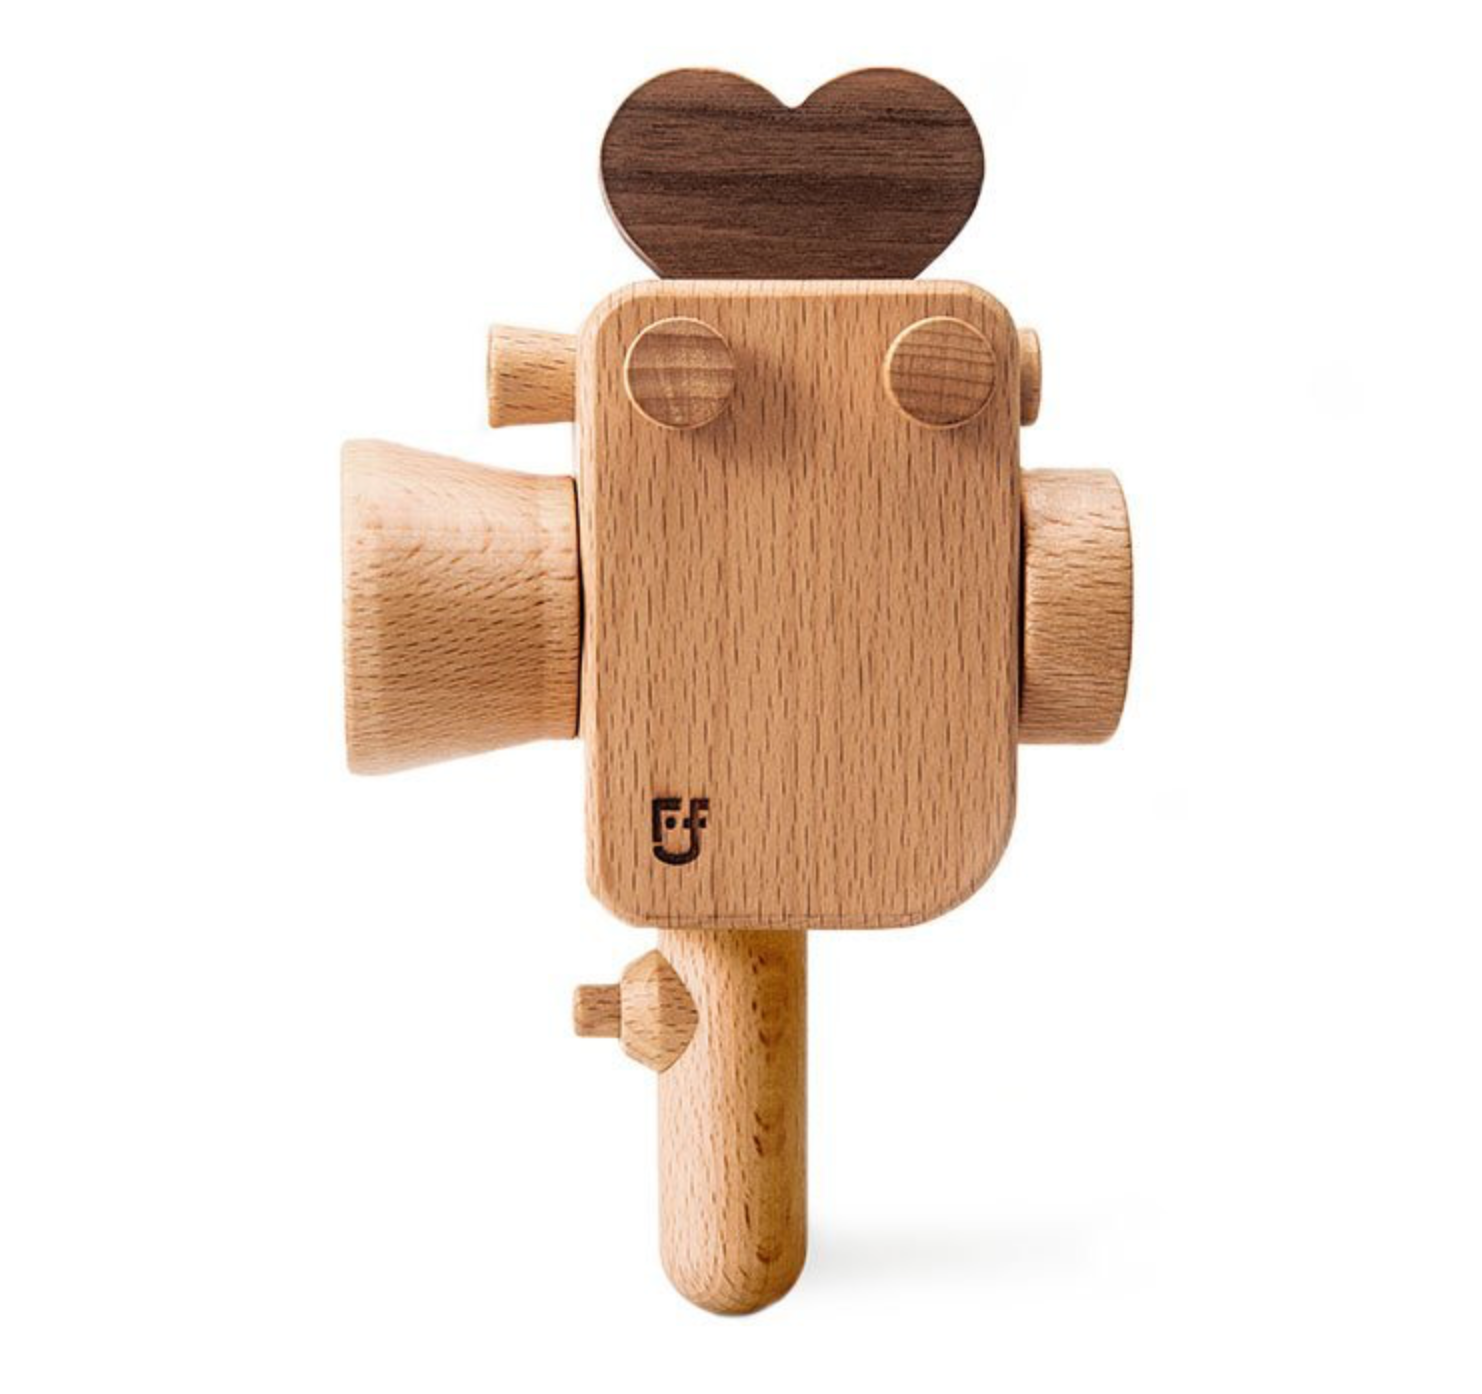 Super 8 wooden toy camera